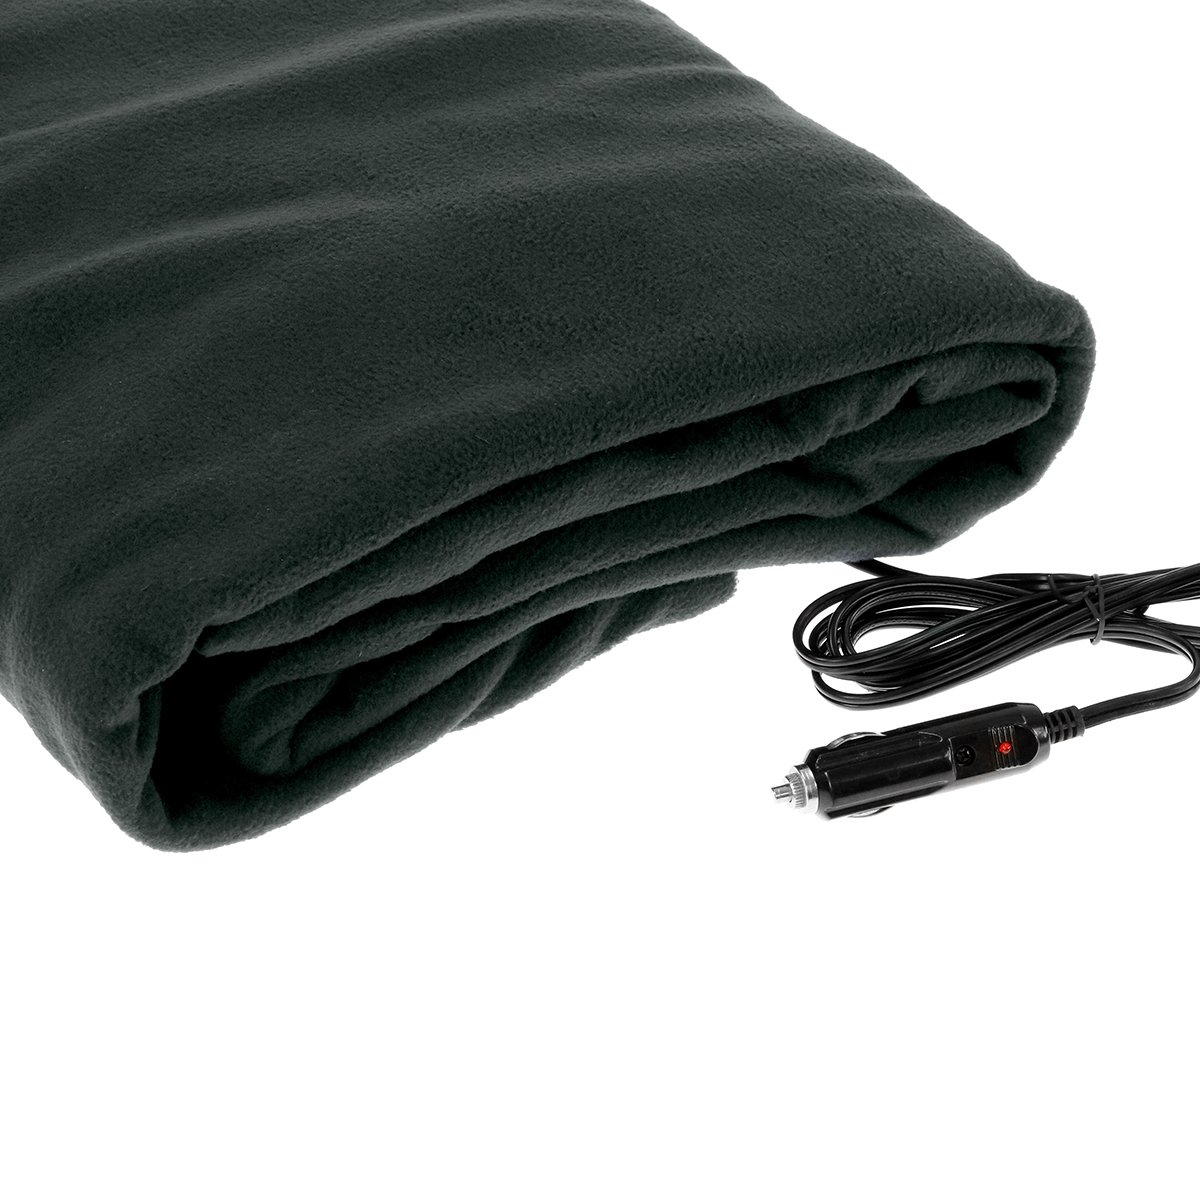 Heated Electric Car Blanket 150x110cm 12V - Black 1